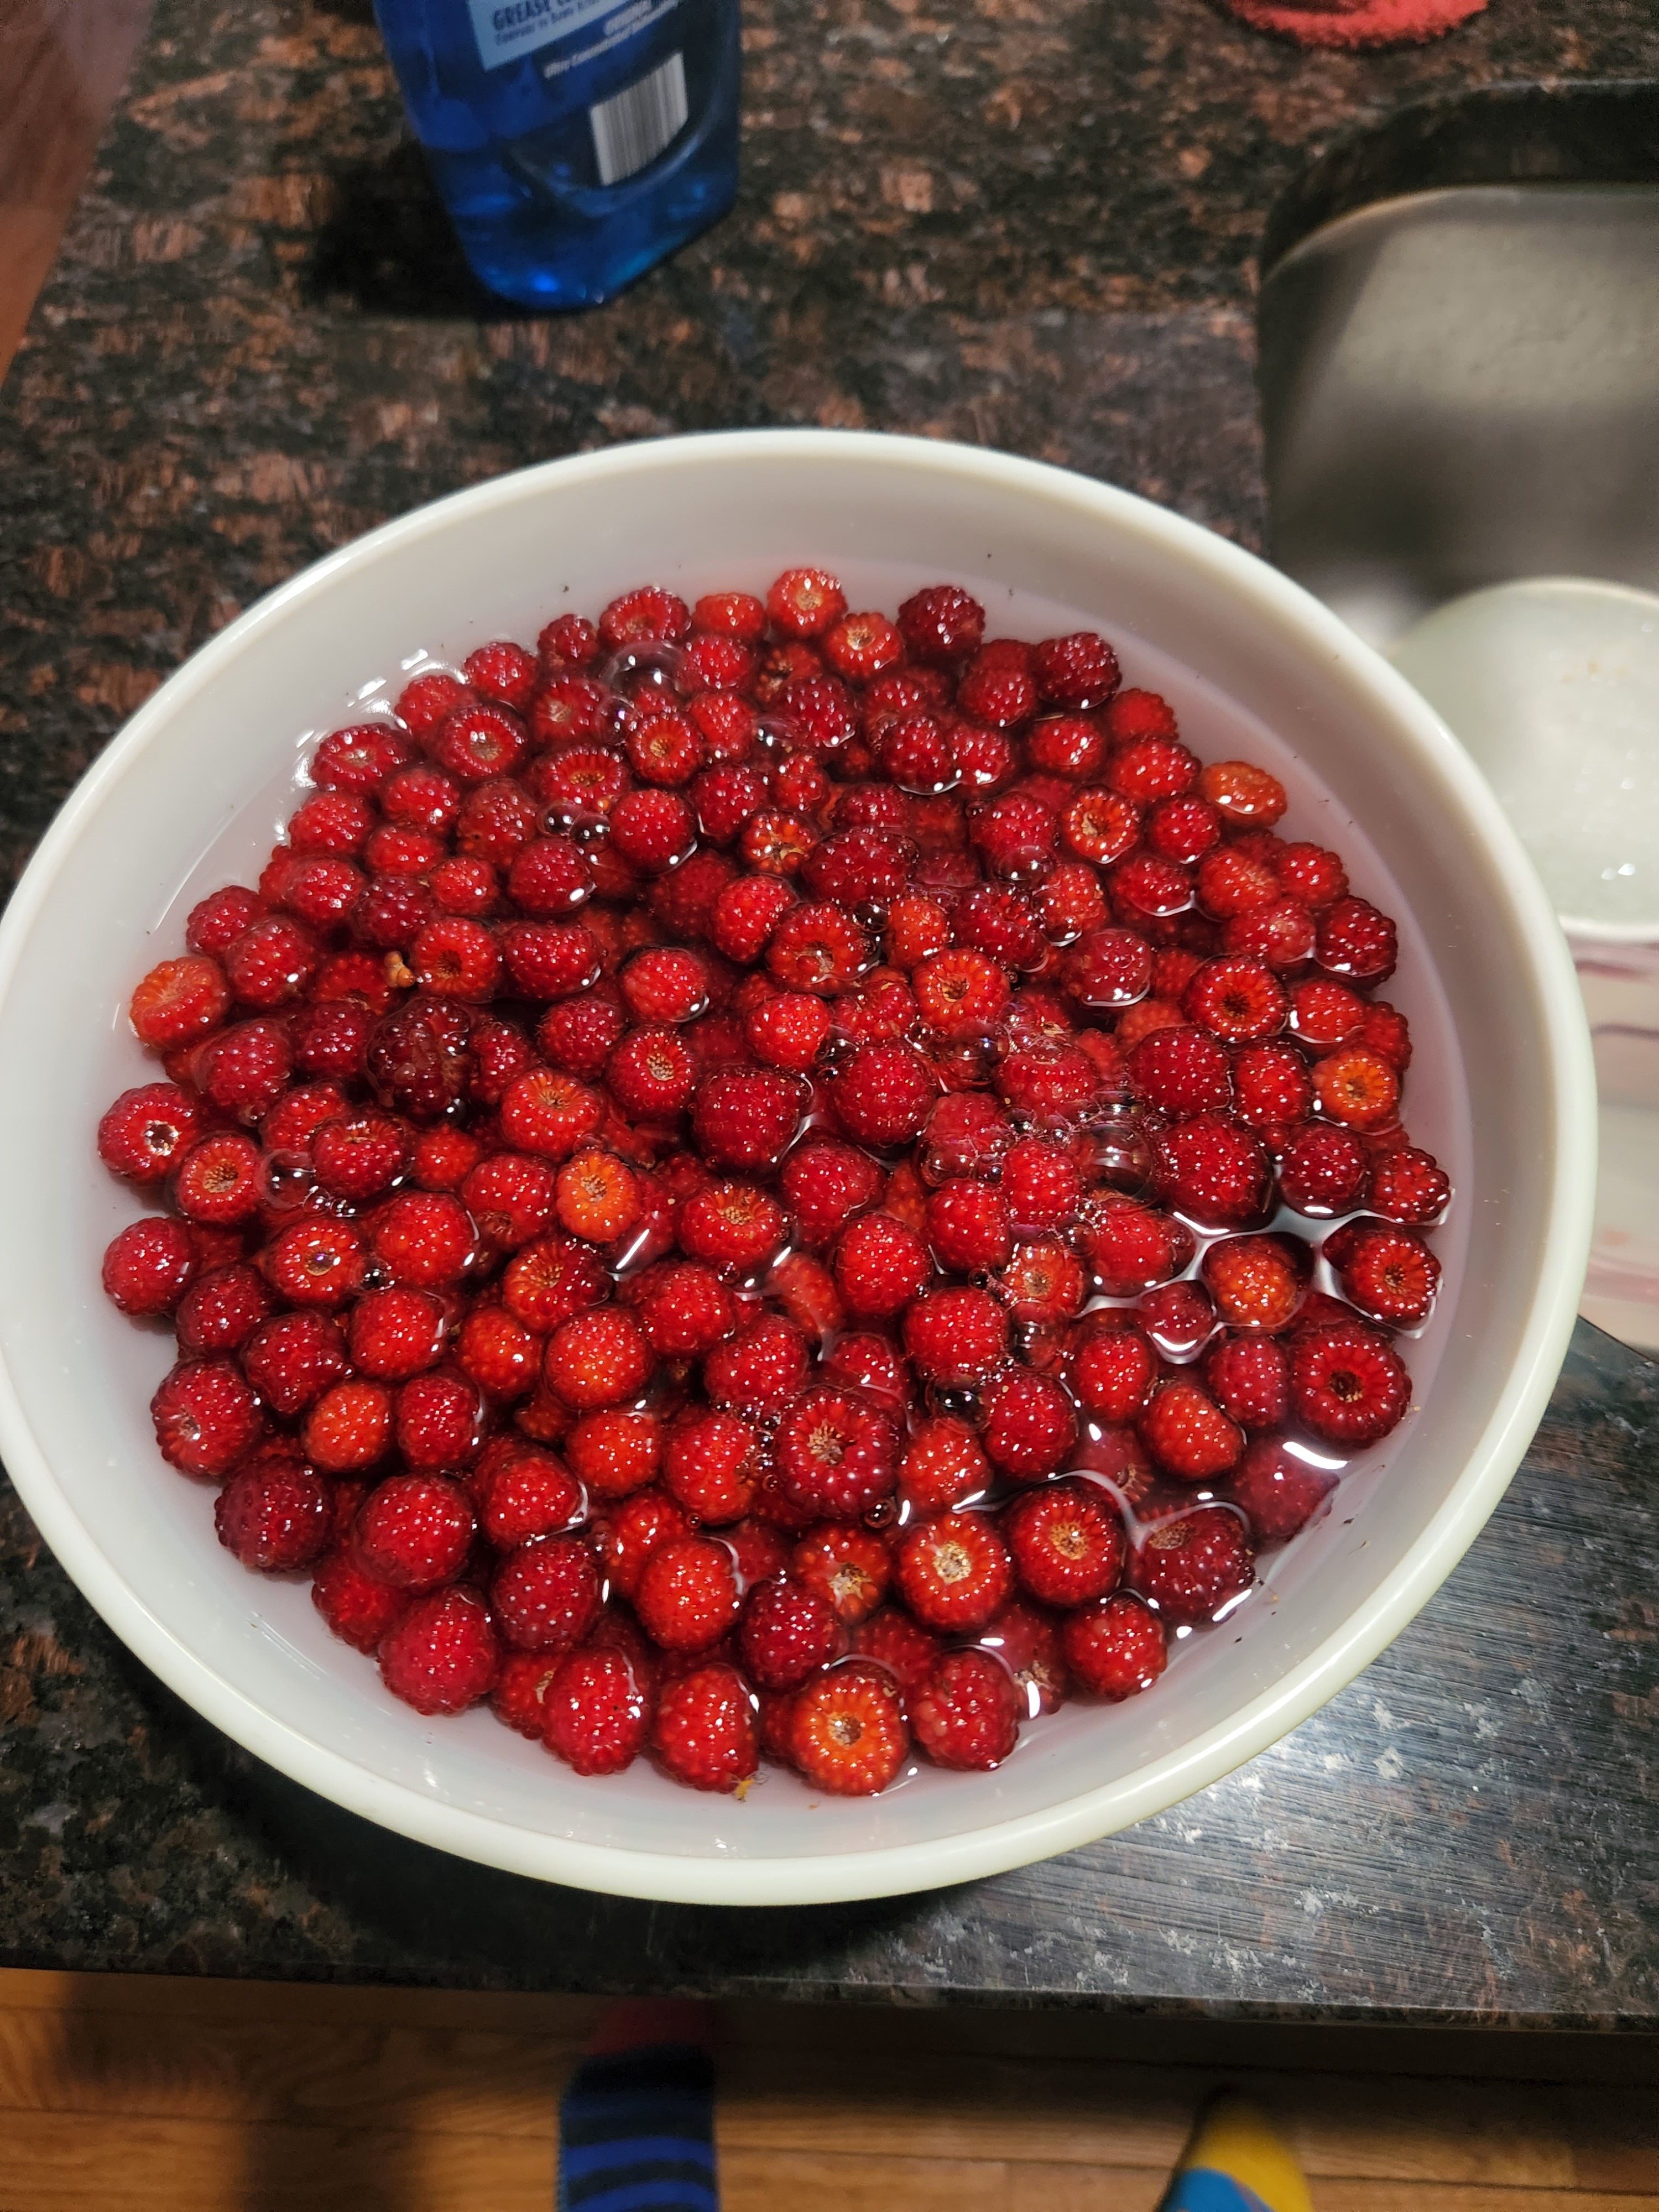 Soaking the berries